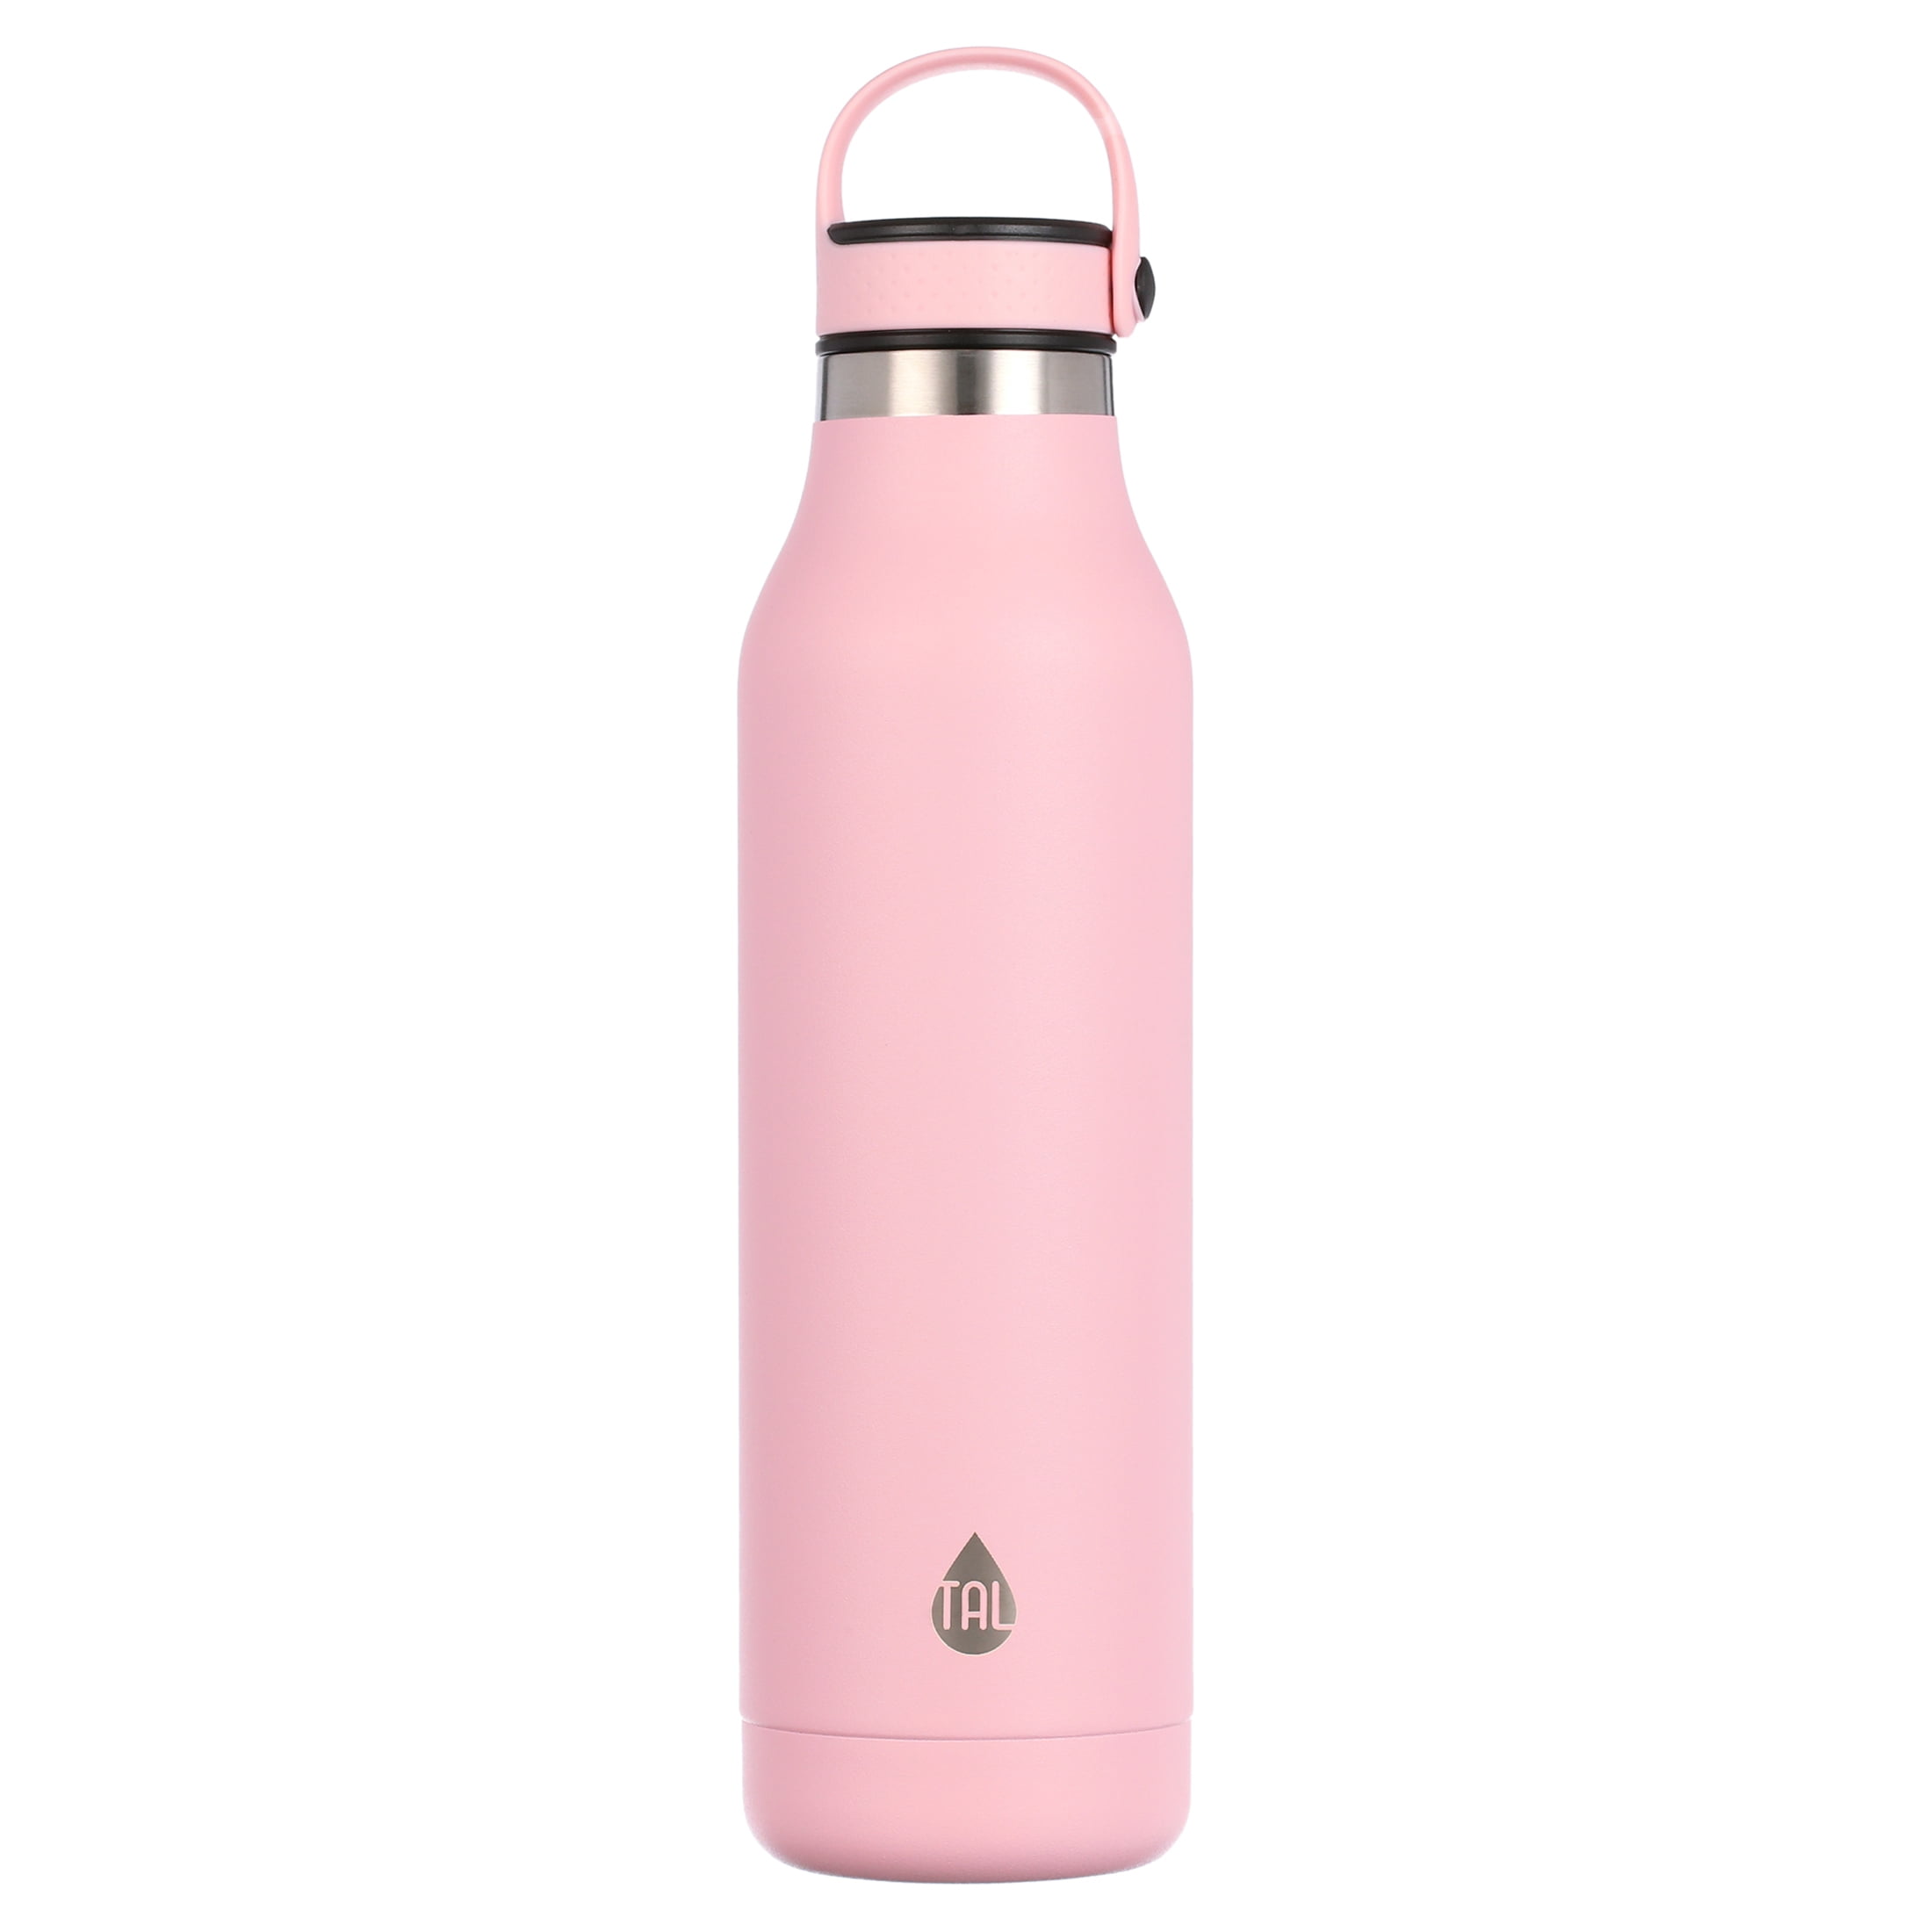 TAL Stainless Steel Ranger Water Bottle 26 oz, Bright Pink - Yahoo